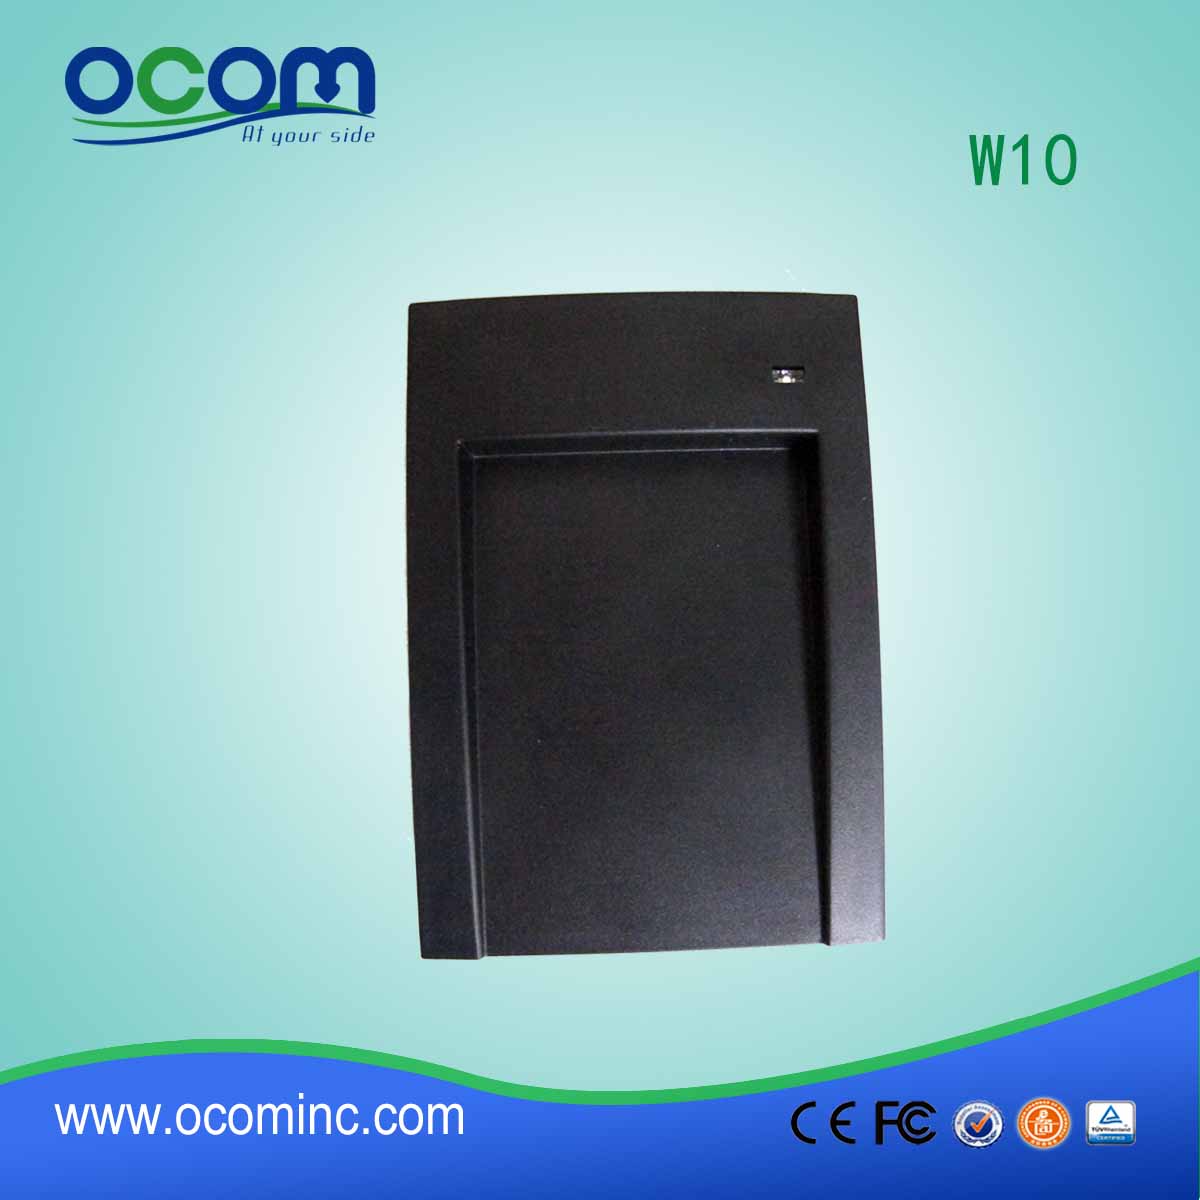 OCOM-W10 قارئ بطاقة RFID والكاتب 13.56MHZ ISO14443 بروتوكول TYPEA / B ISO15693